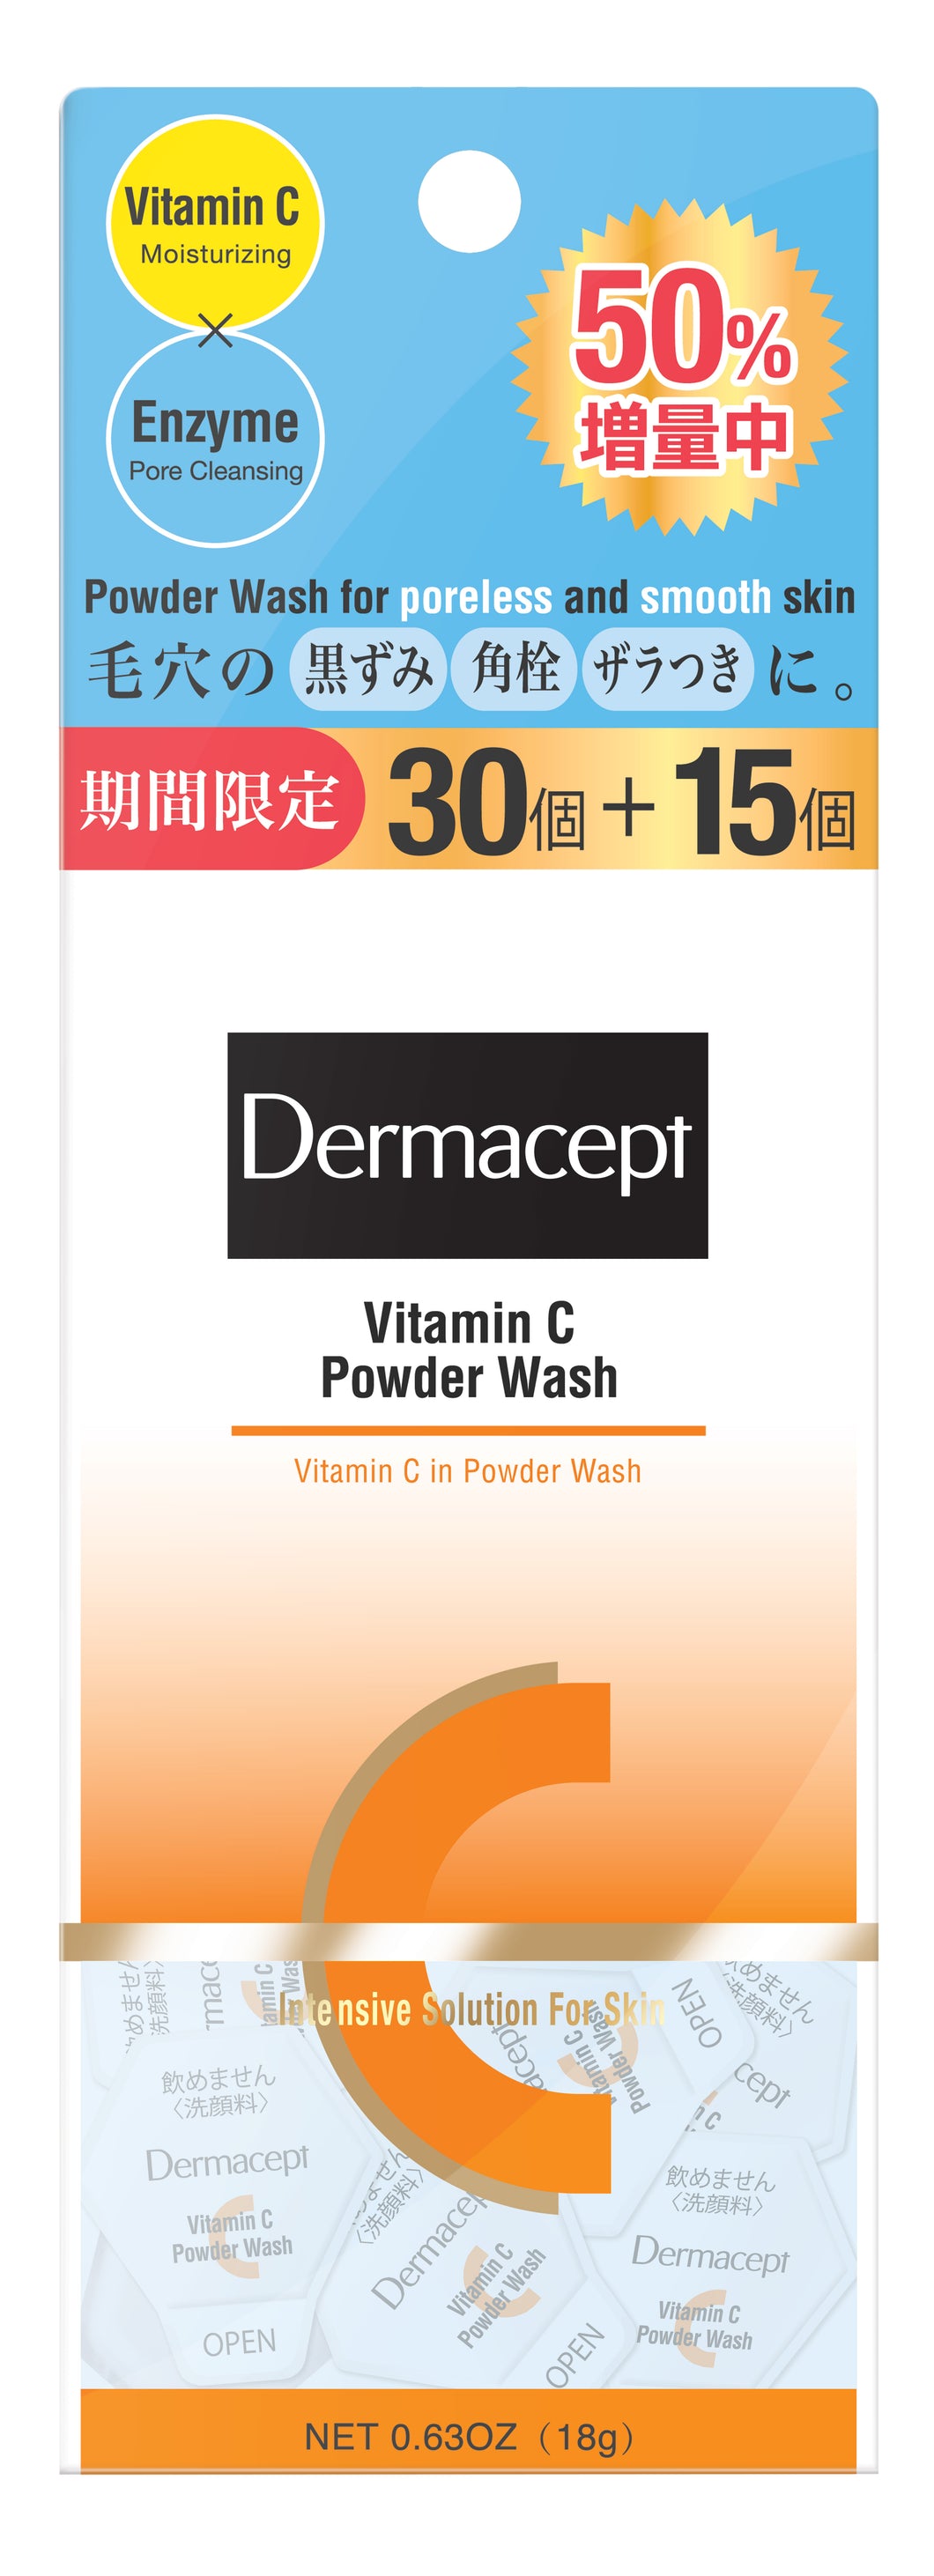 Vitamin C Powder Wash 維他命C酵素洗顔粉 (45pcs)